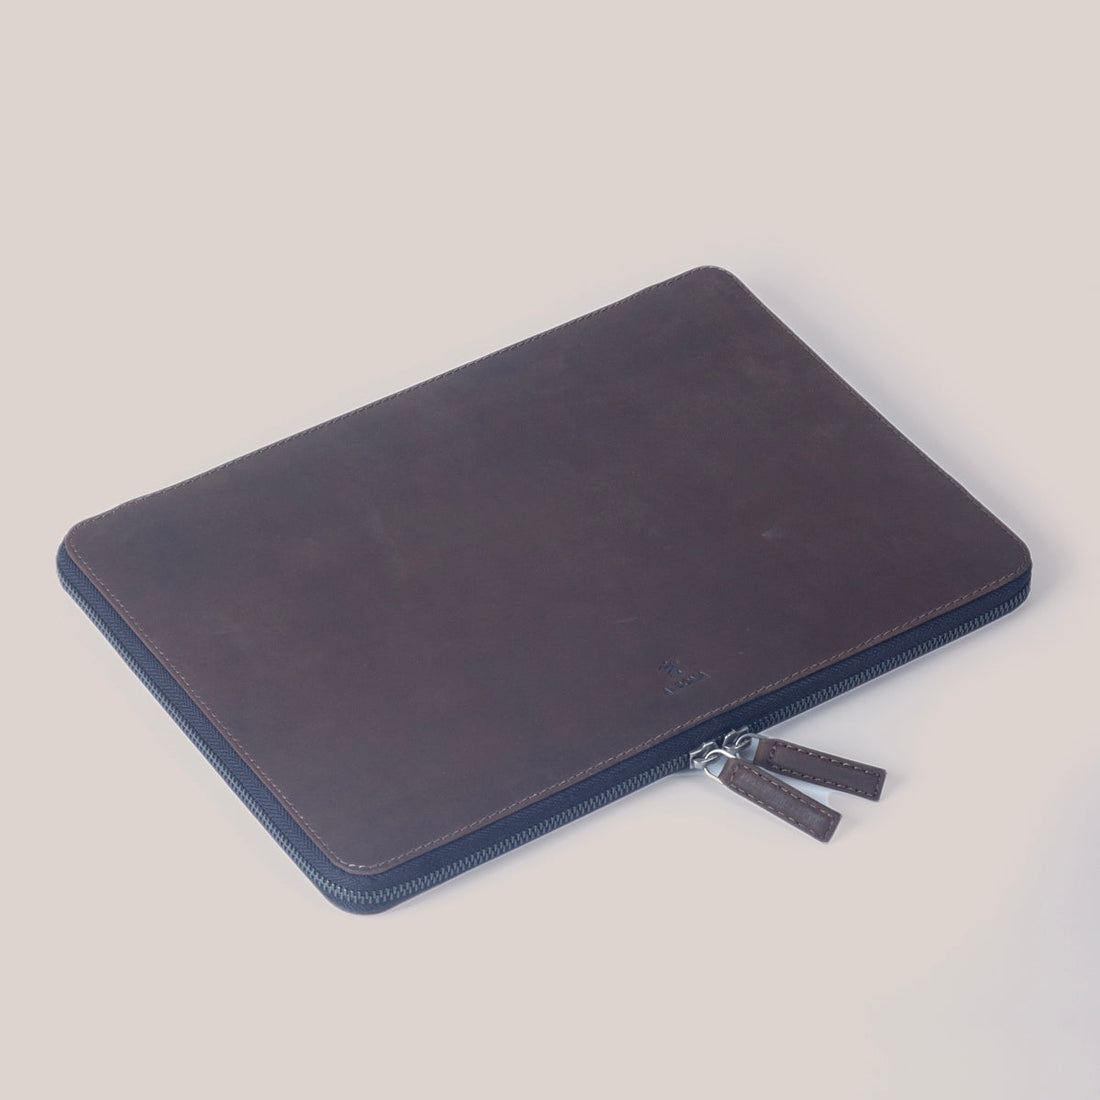 Microsoft Surface Zippered Laptop Case - Felt and Tan Crunch